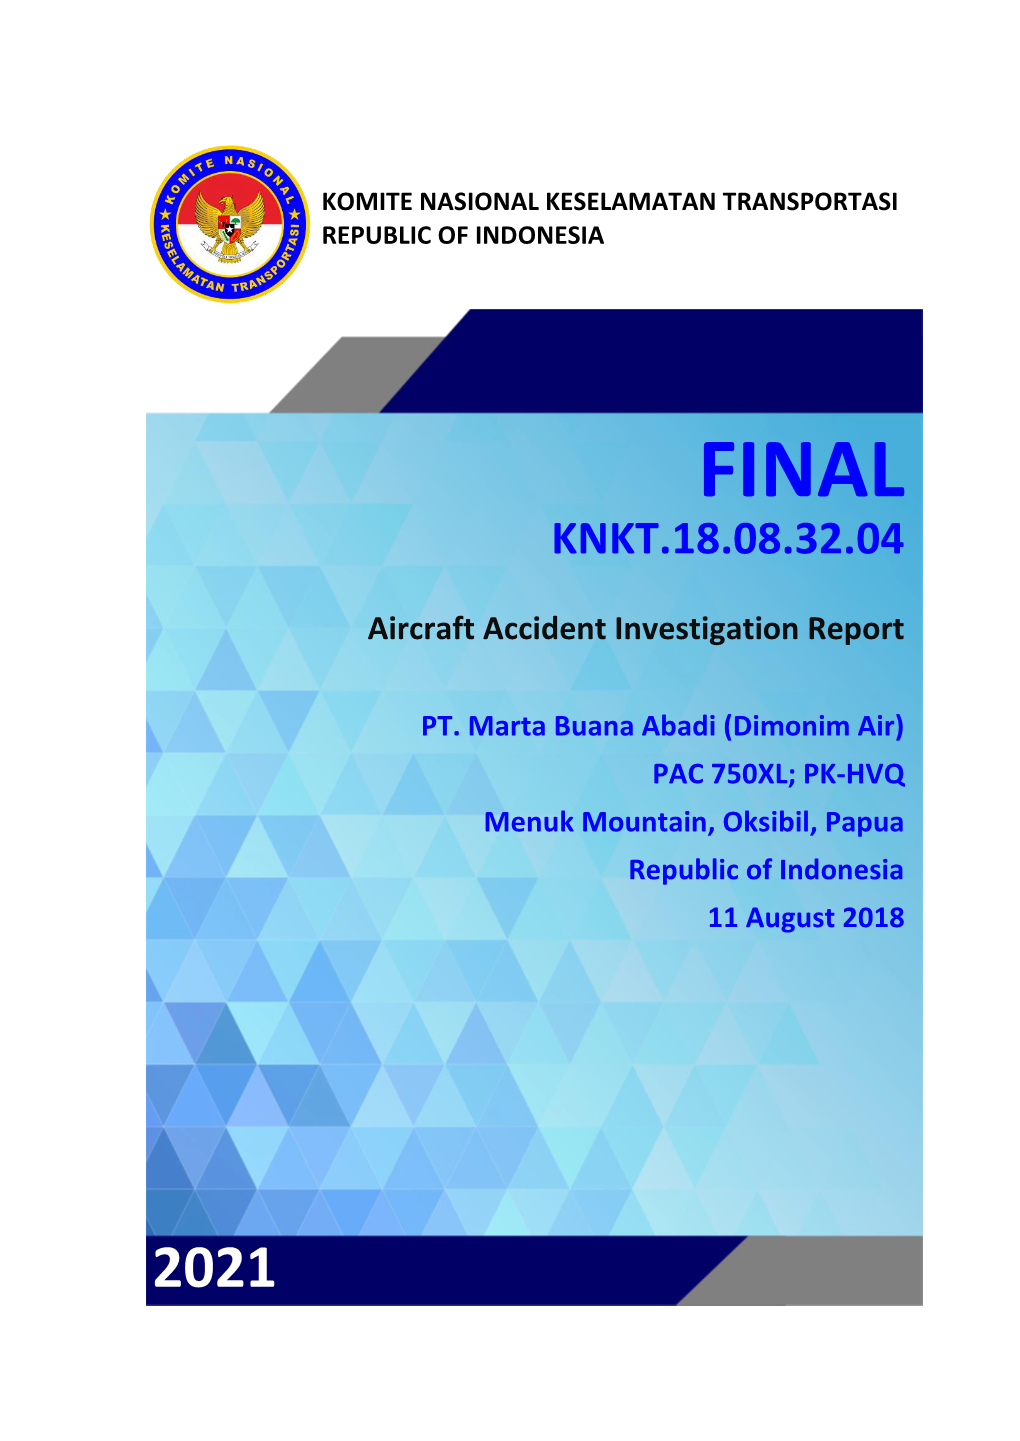 Final Report Is Published by the Komite Nasional Keselamatan Transportasi (KNKT), Transportation Building, 3Rd Floor, Jalan Medan Merdeka Timur No